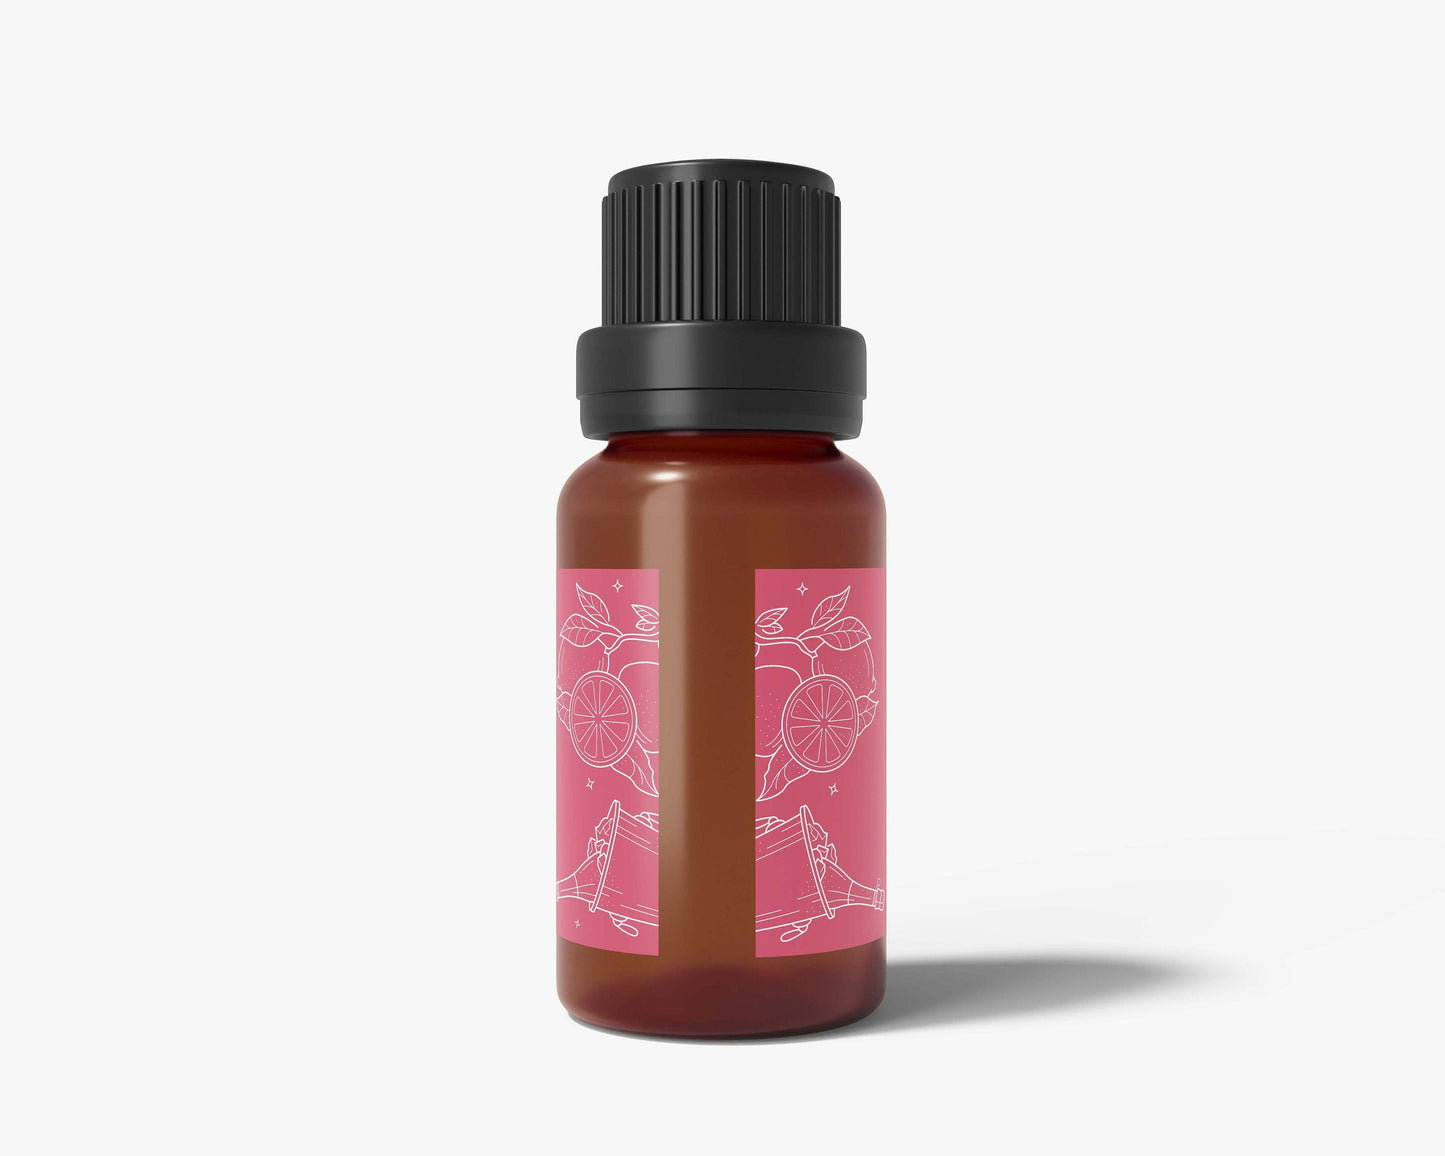 Berry Mimosa Premium Grade Fragrance Oil Fragrance Oil CE Craft 